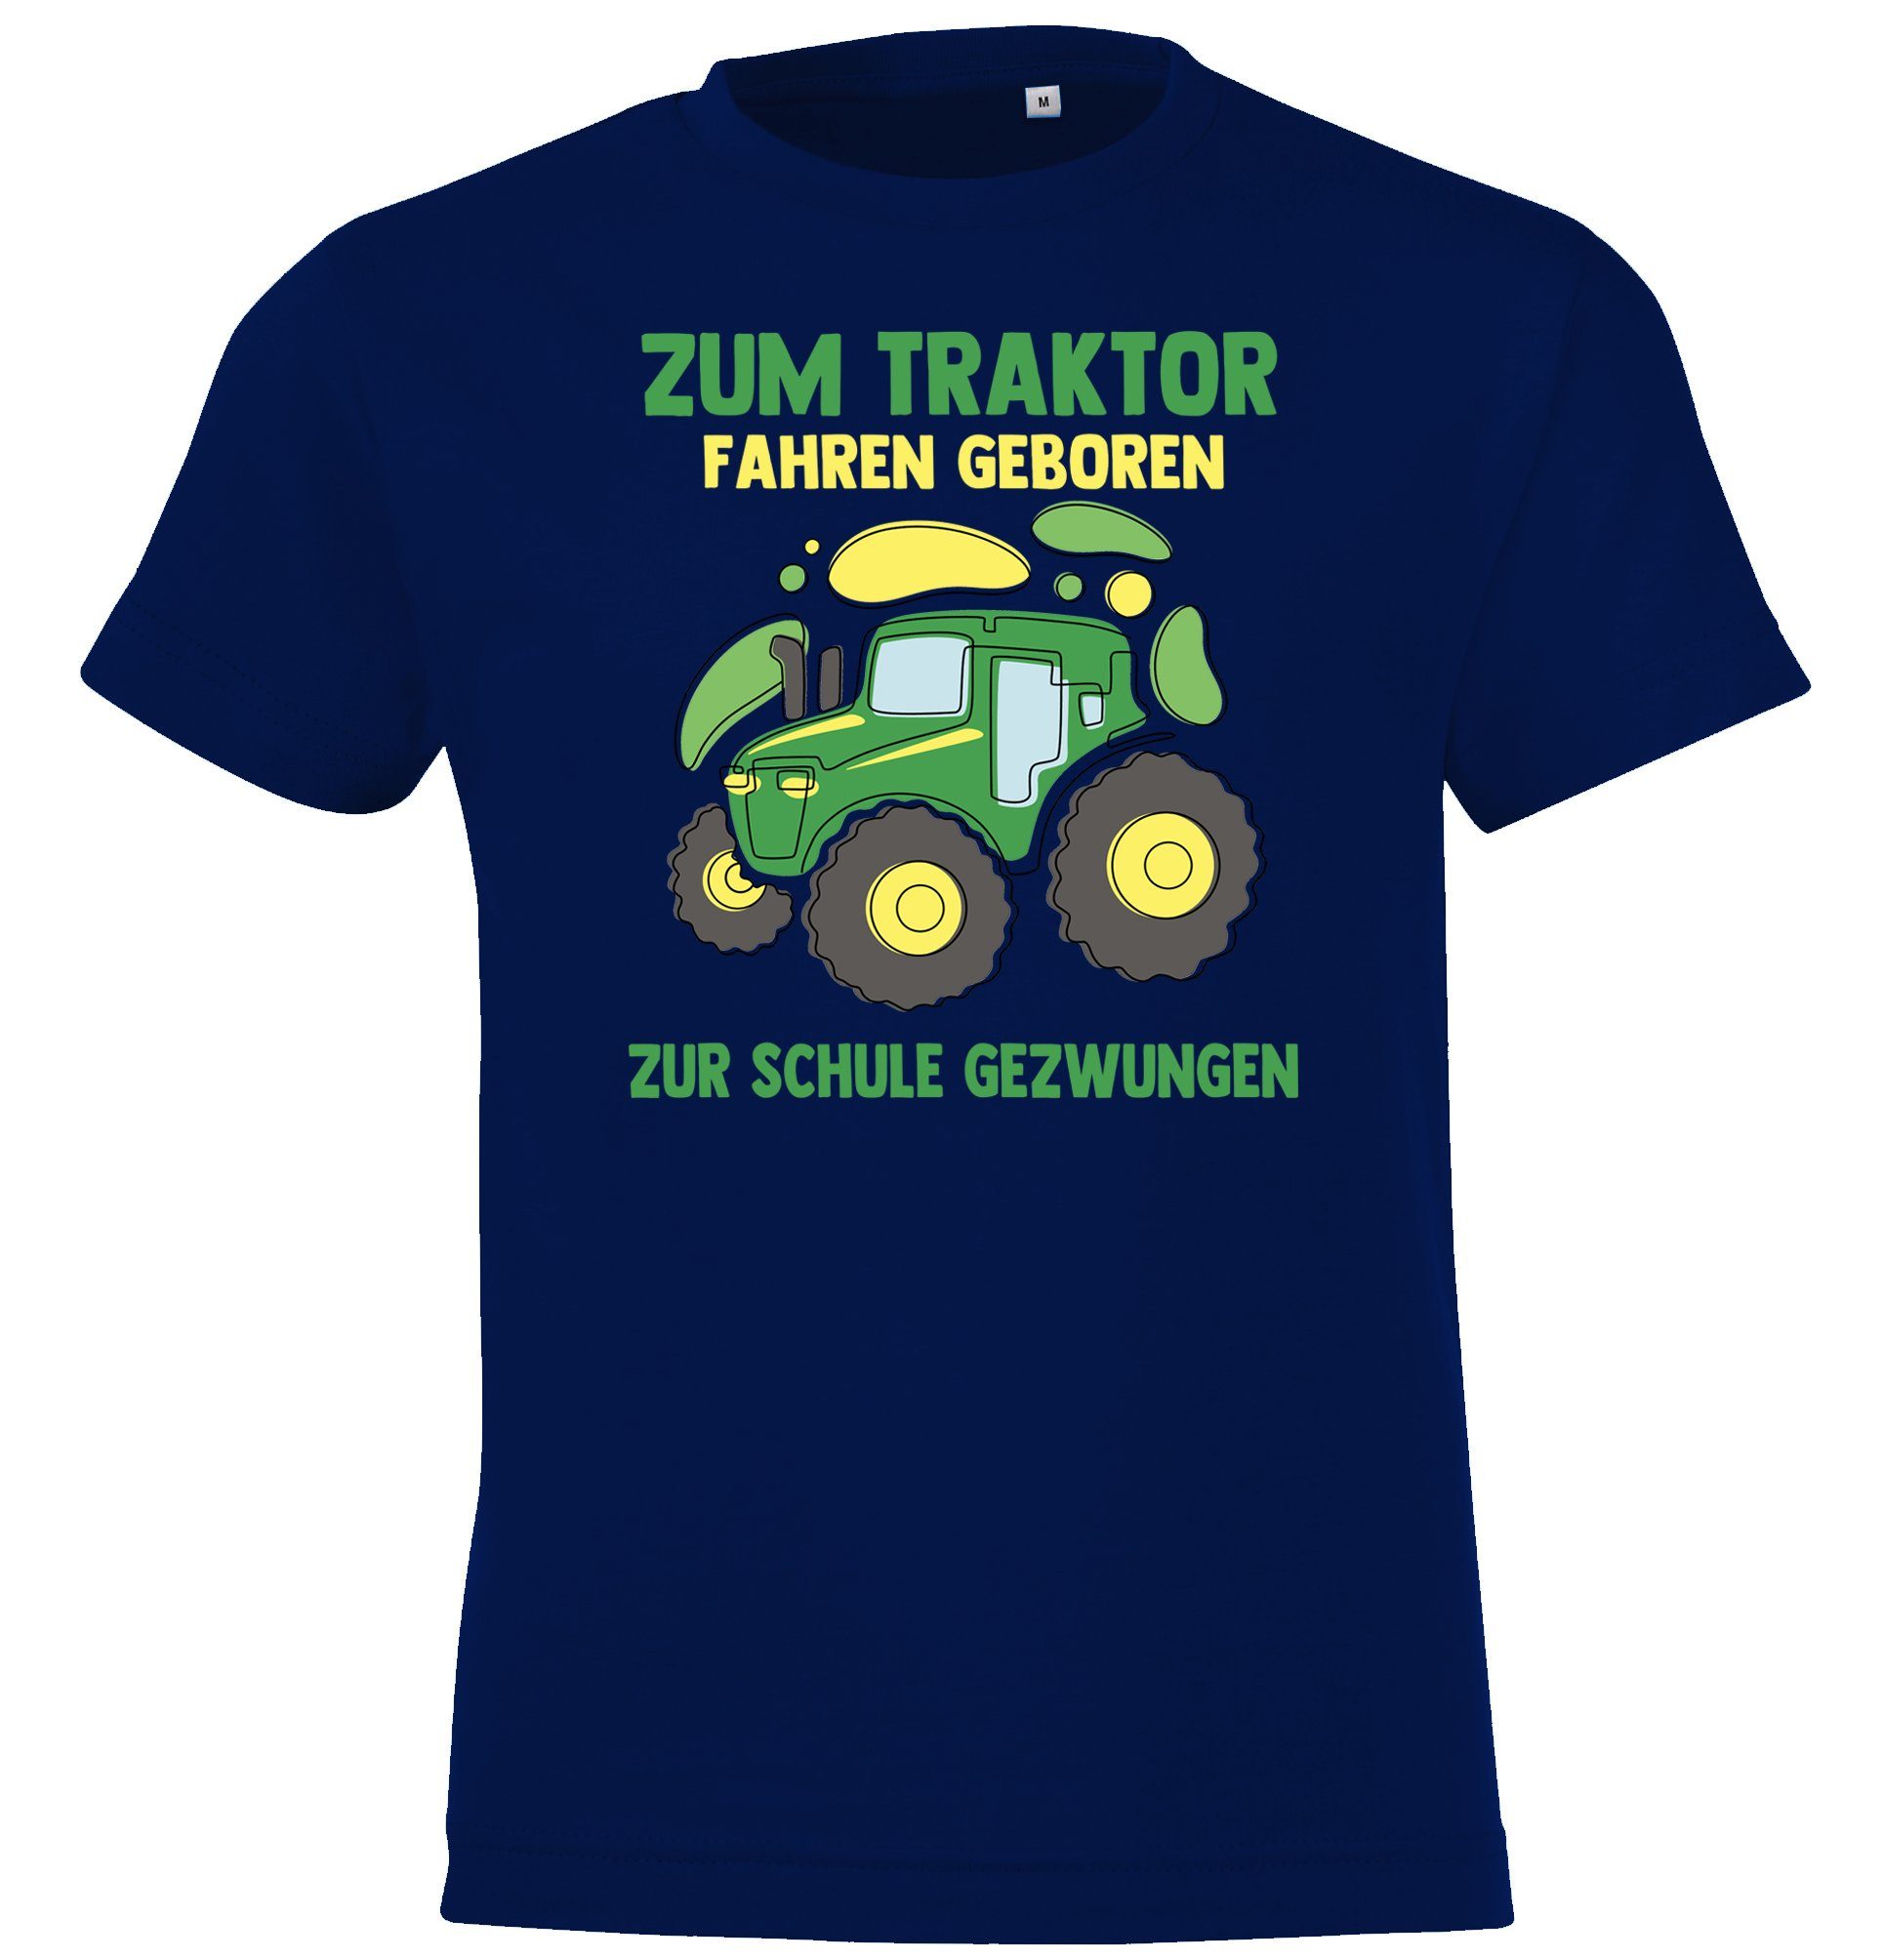 Youth Designz Traktor T-Shirt Kinder Frontprint mit lustigem Navyblau Fahrer Geborener Shirt